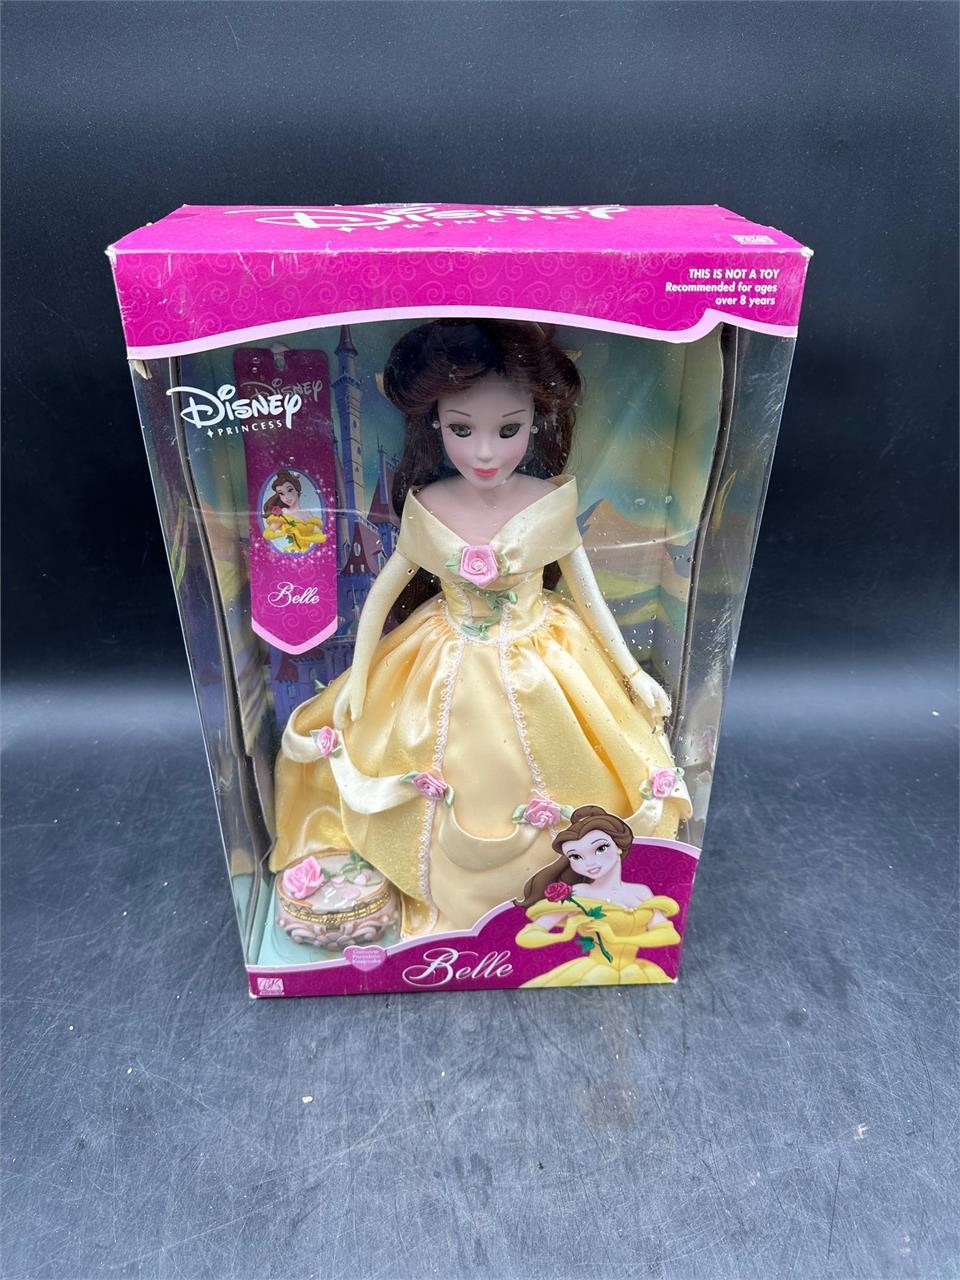 Disney Princess "Belle"